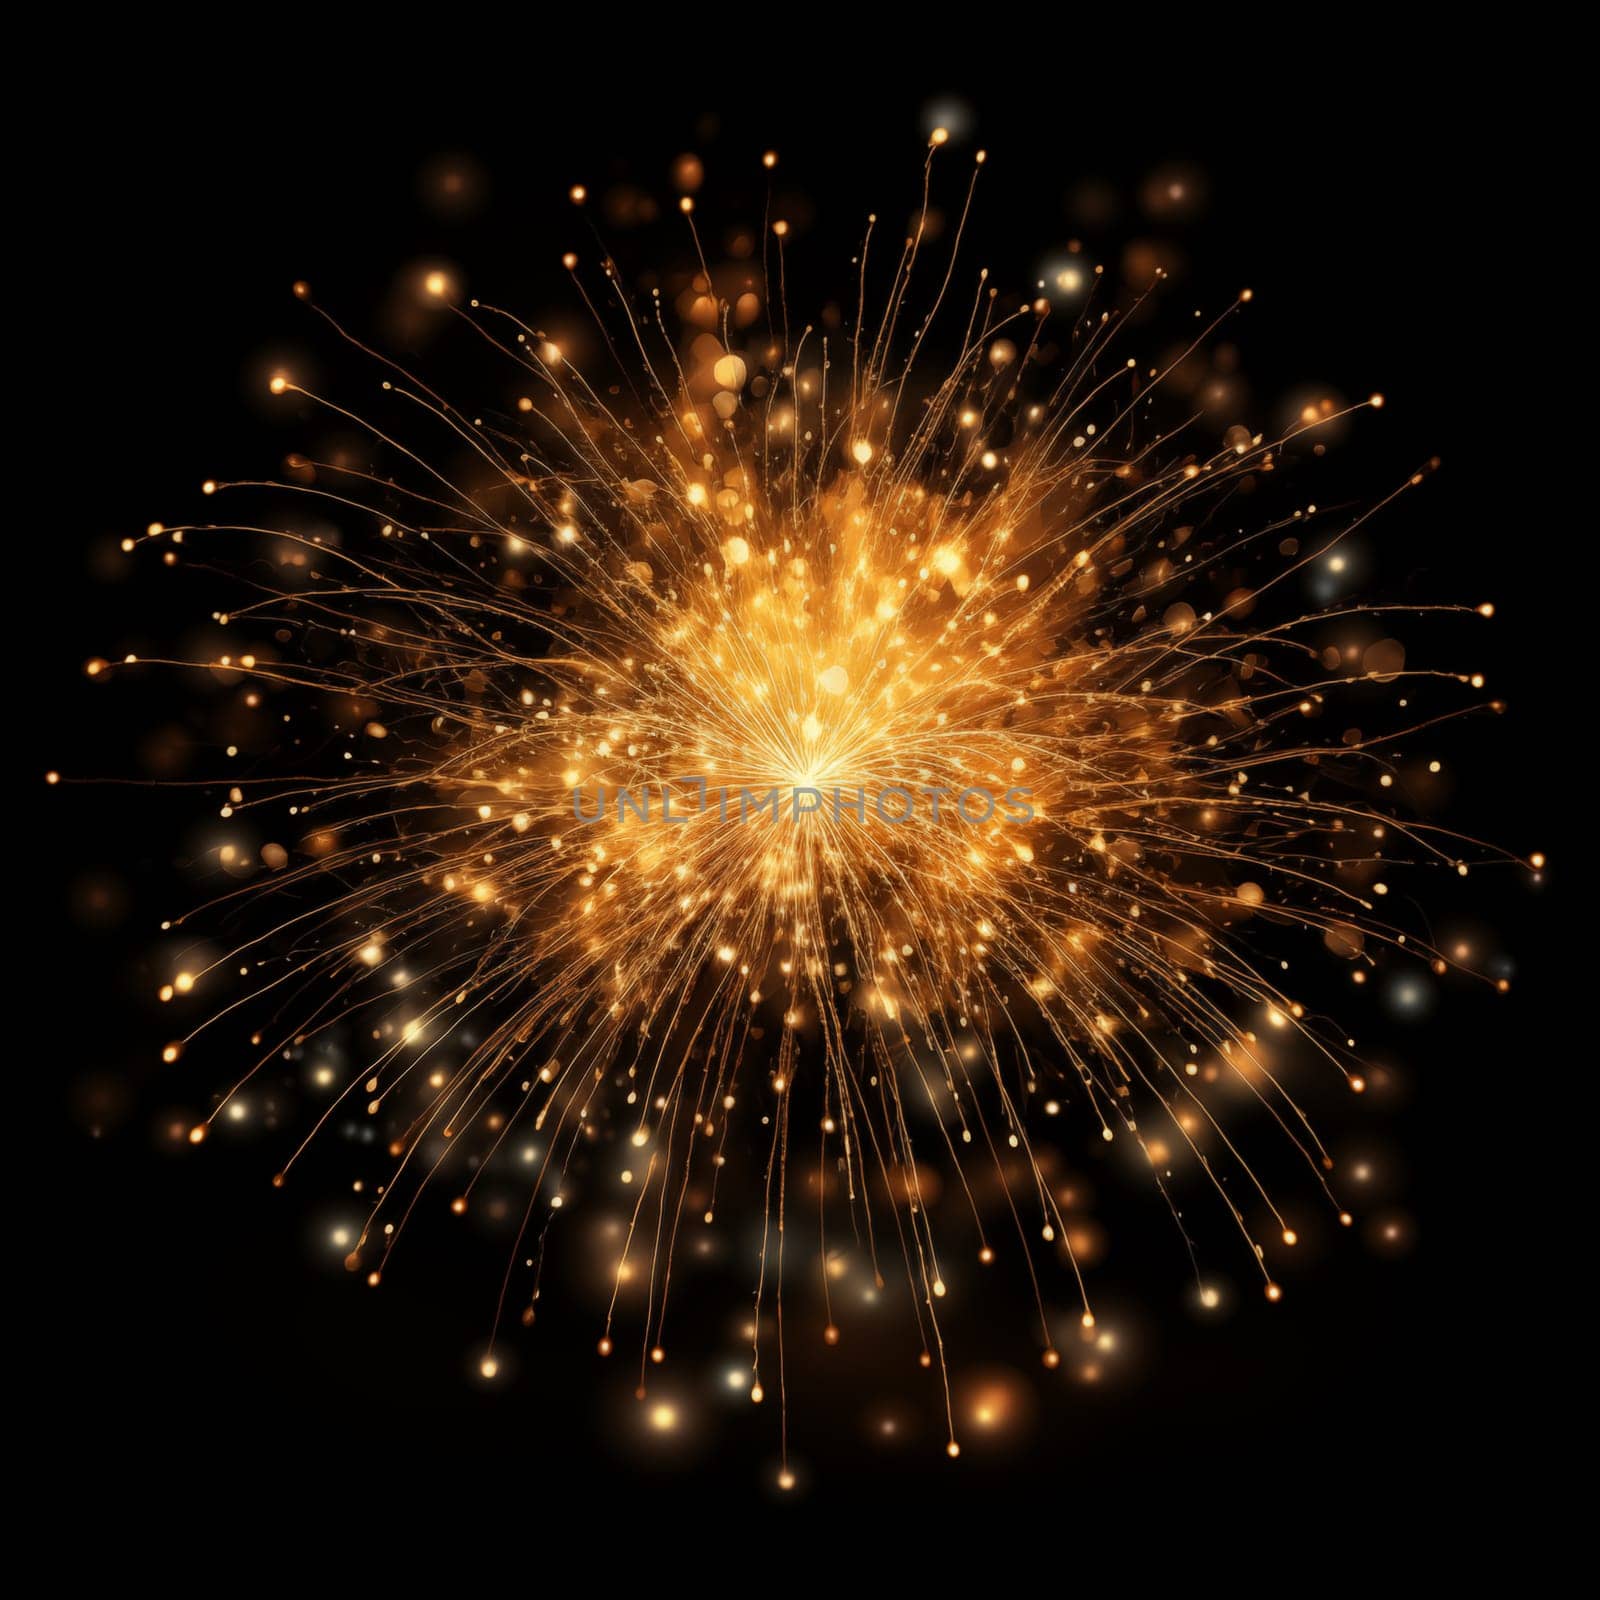 Golden fireworks on black background isolated by Zakharova